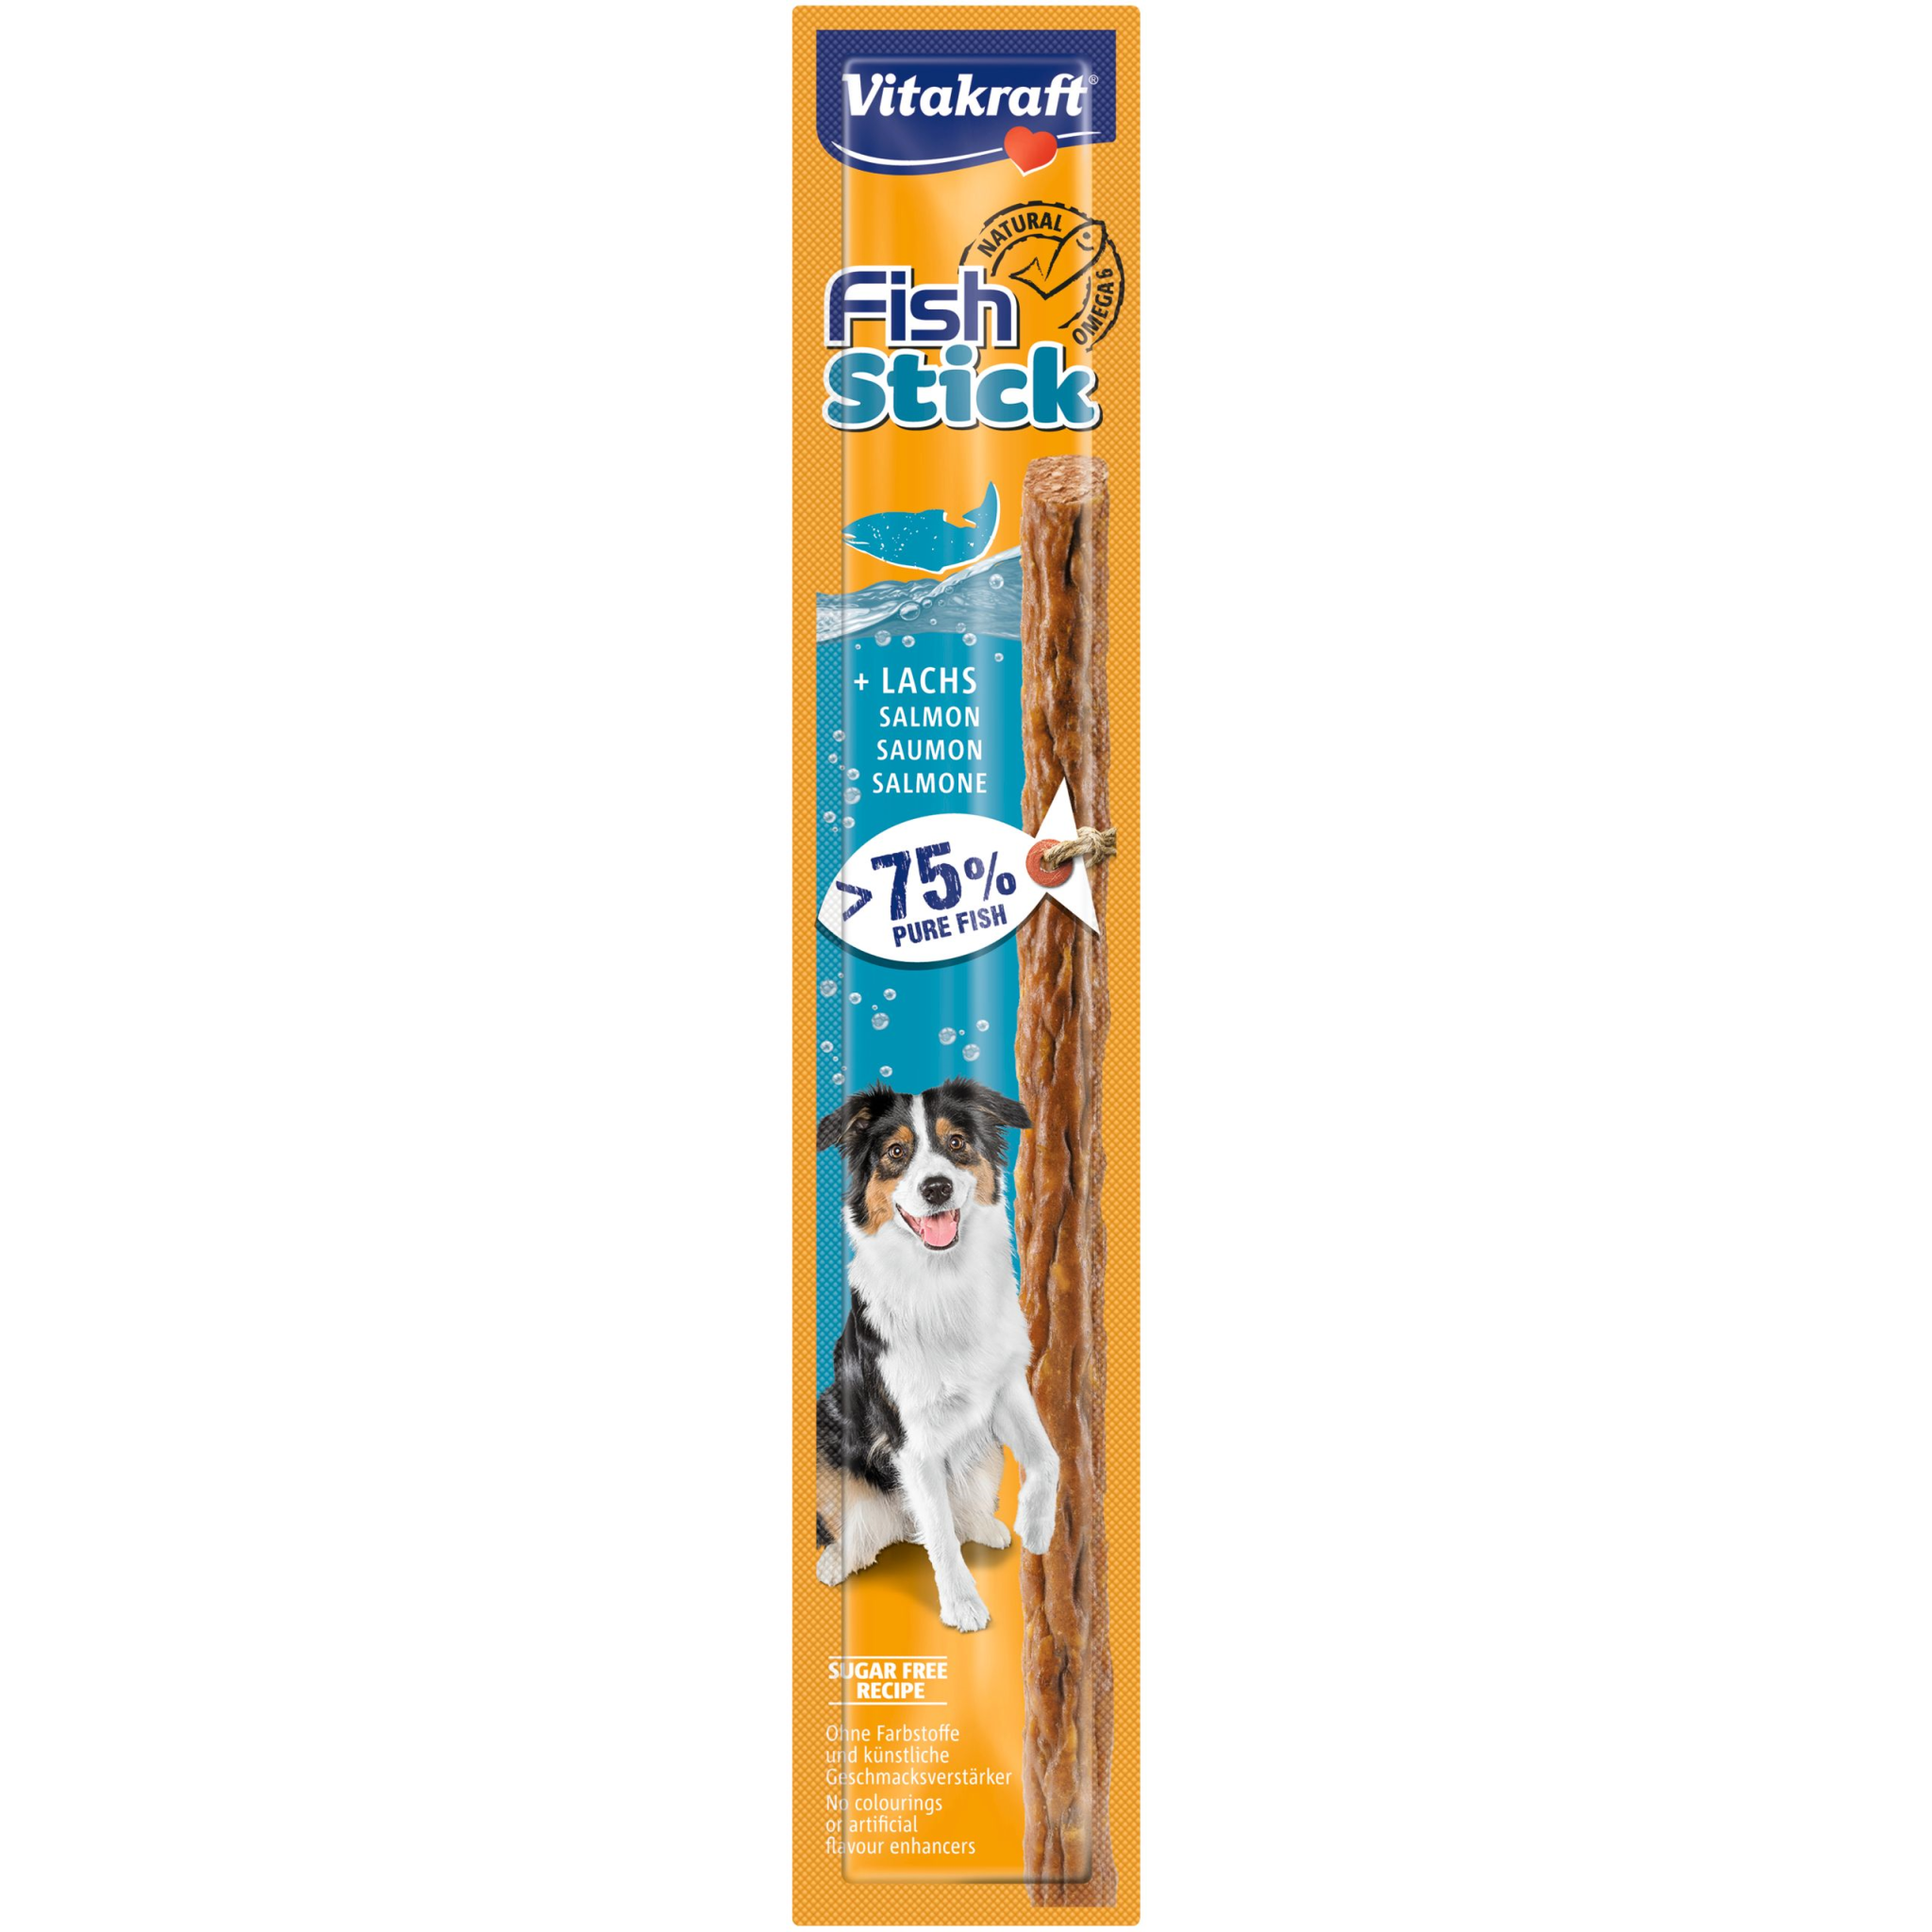 Vitakraft  - Vitakraft Fish Stick Laks 12g, Hundegodbid Beef stick - Dog Treats